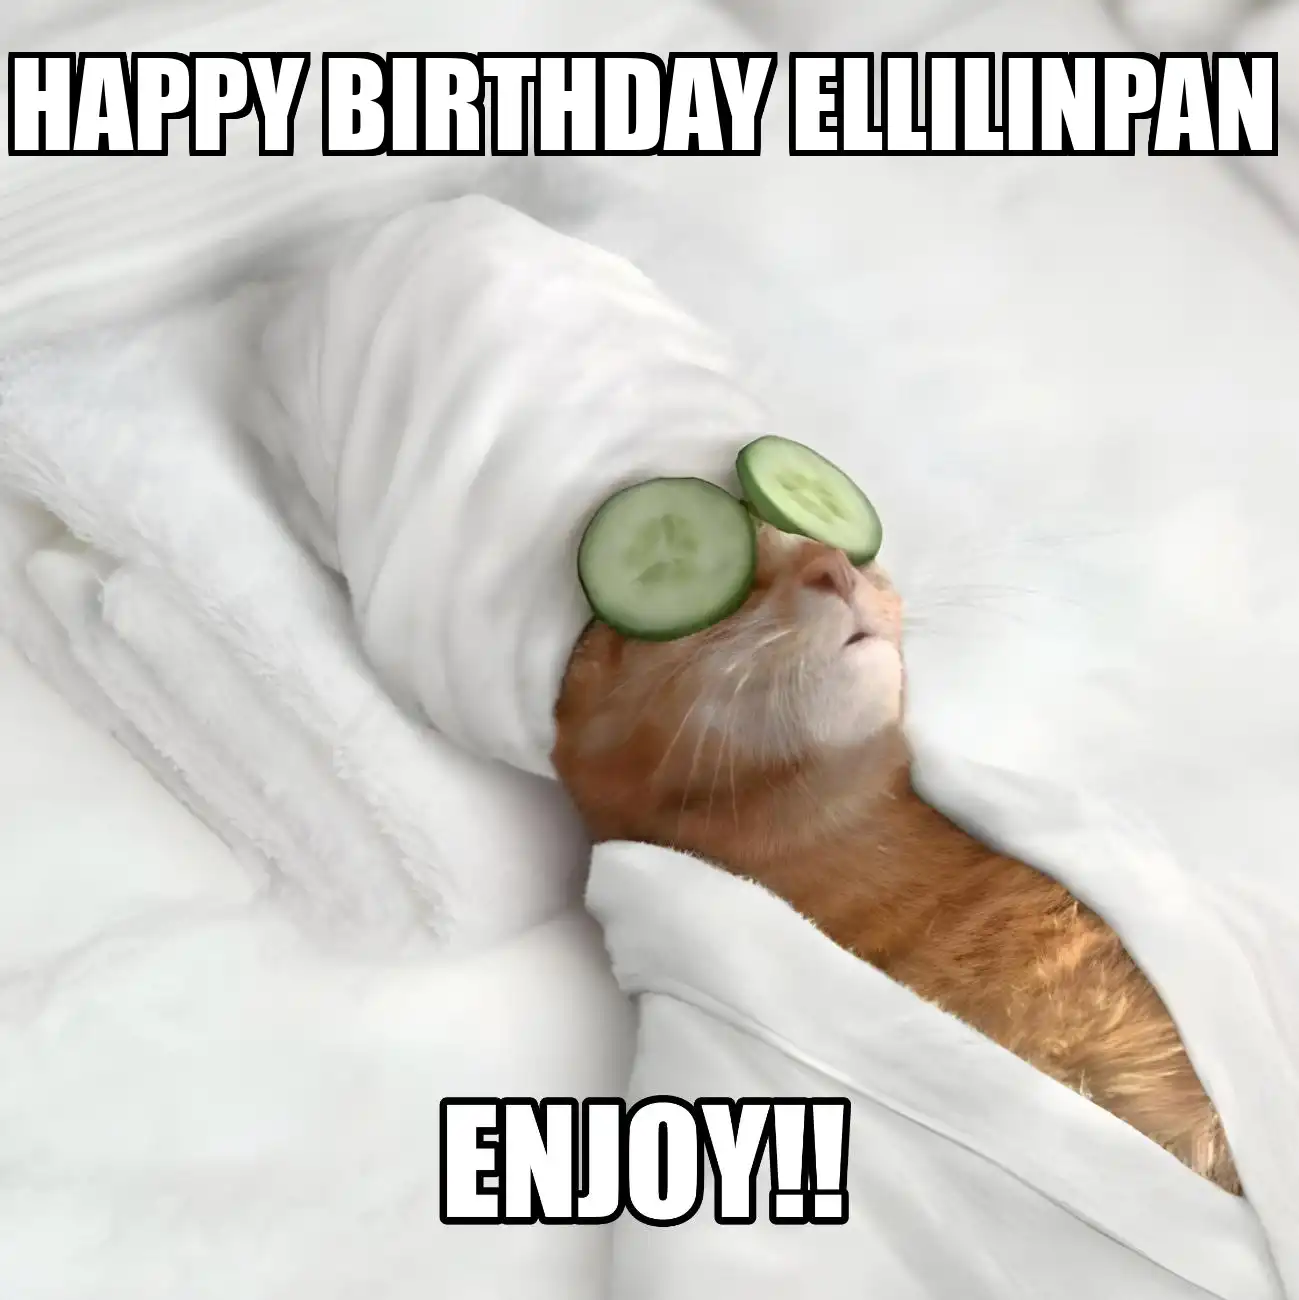 Happy Birthday Ellilinpan Enjoy Cat Meme